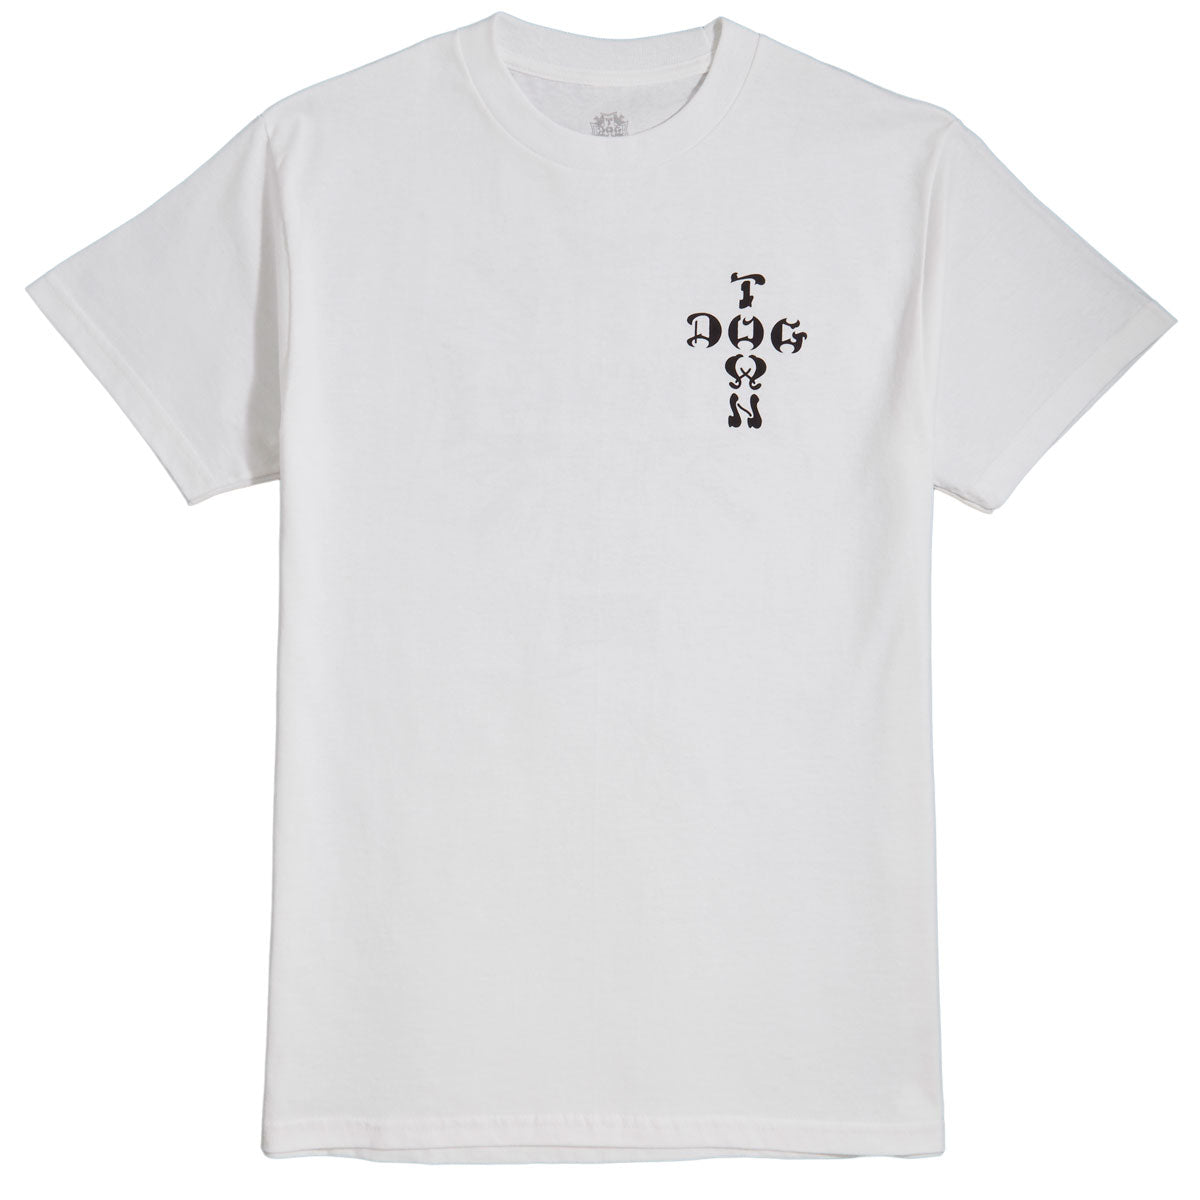 Dogtown Cross Logo T-Shirt - White/Black image 2